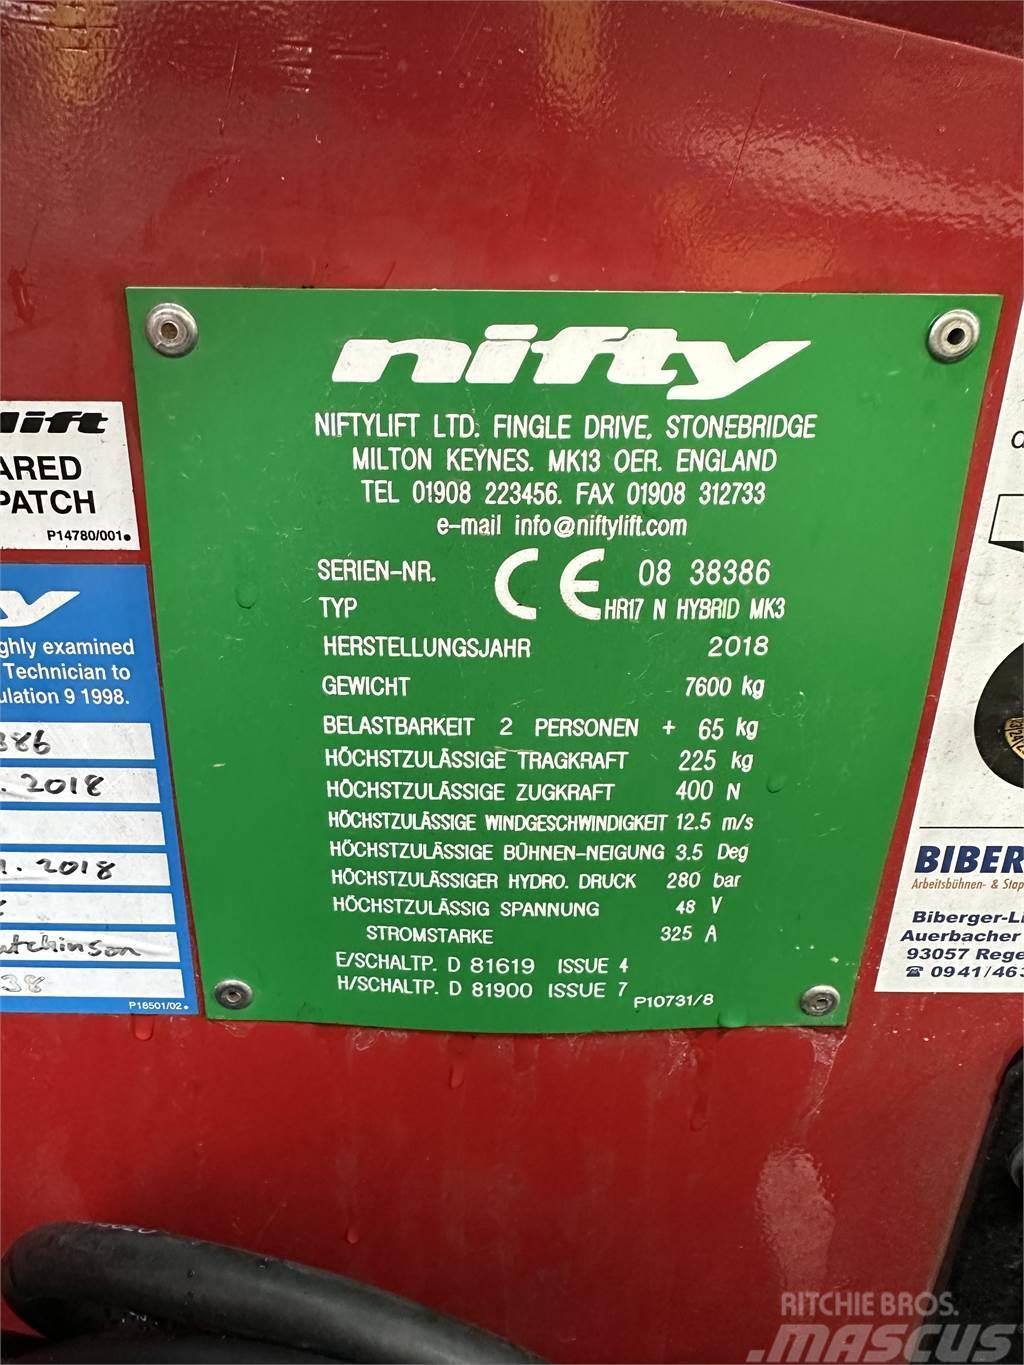 Niftylift HR 17 N HYBRID MK3 Karos emelők